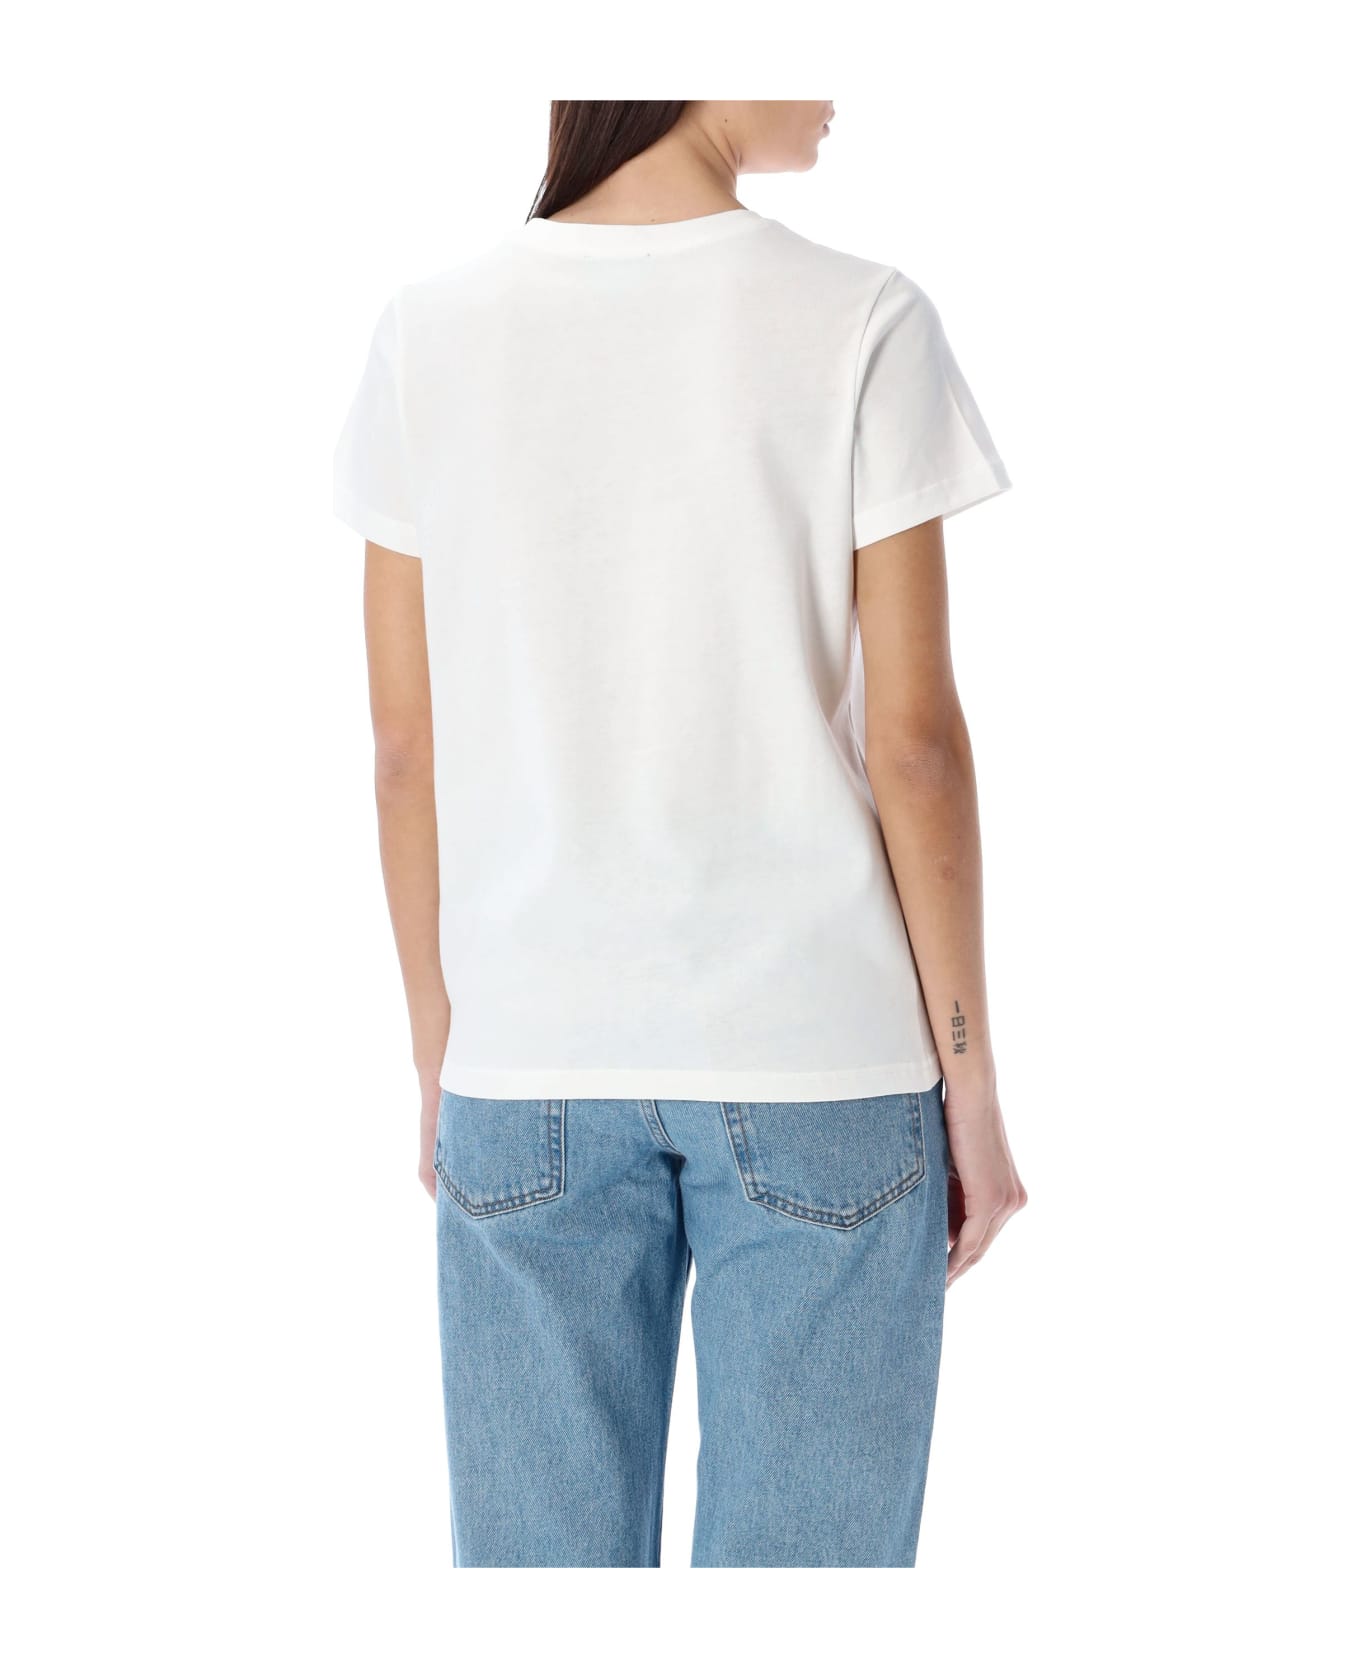 A.P.C. Denise T-shirt - WHITE